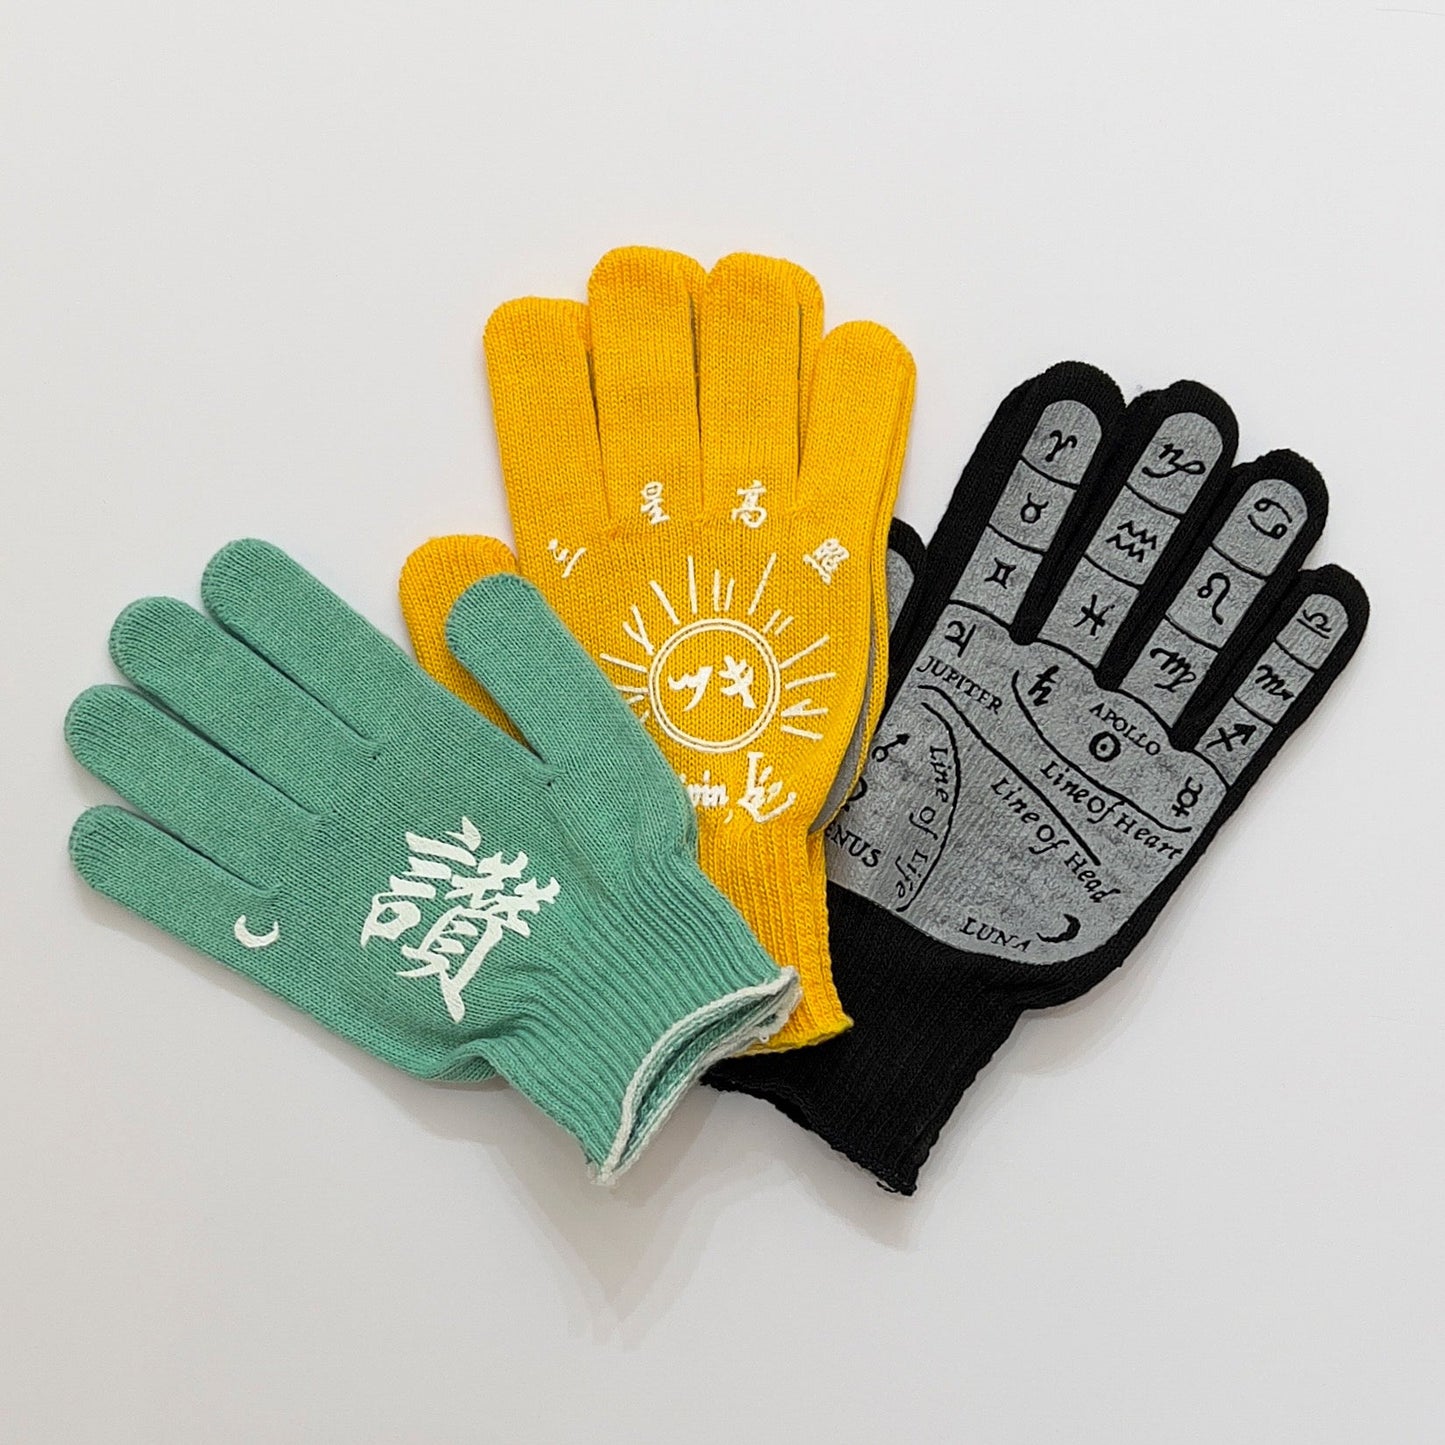 Hui hand gloves